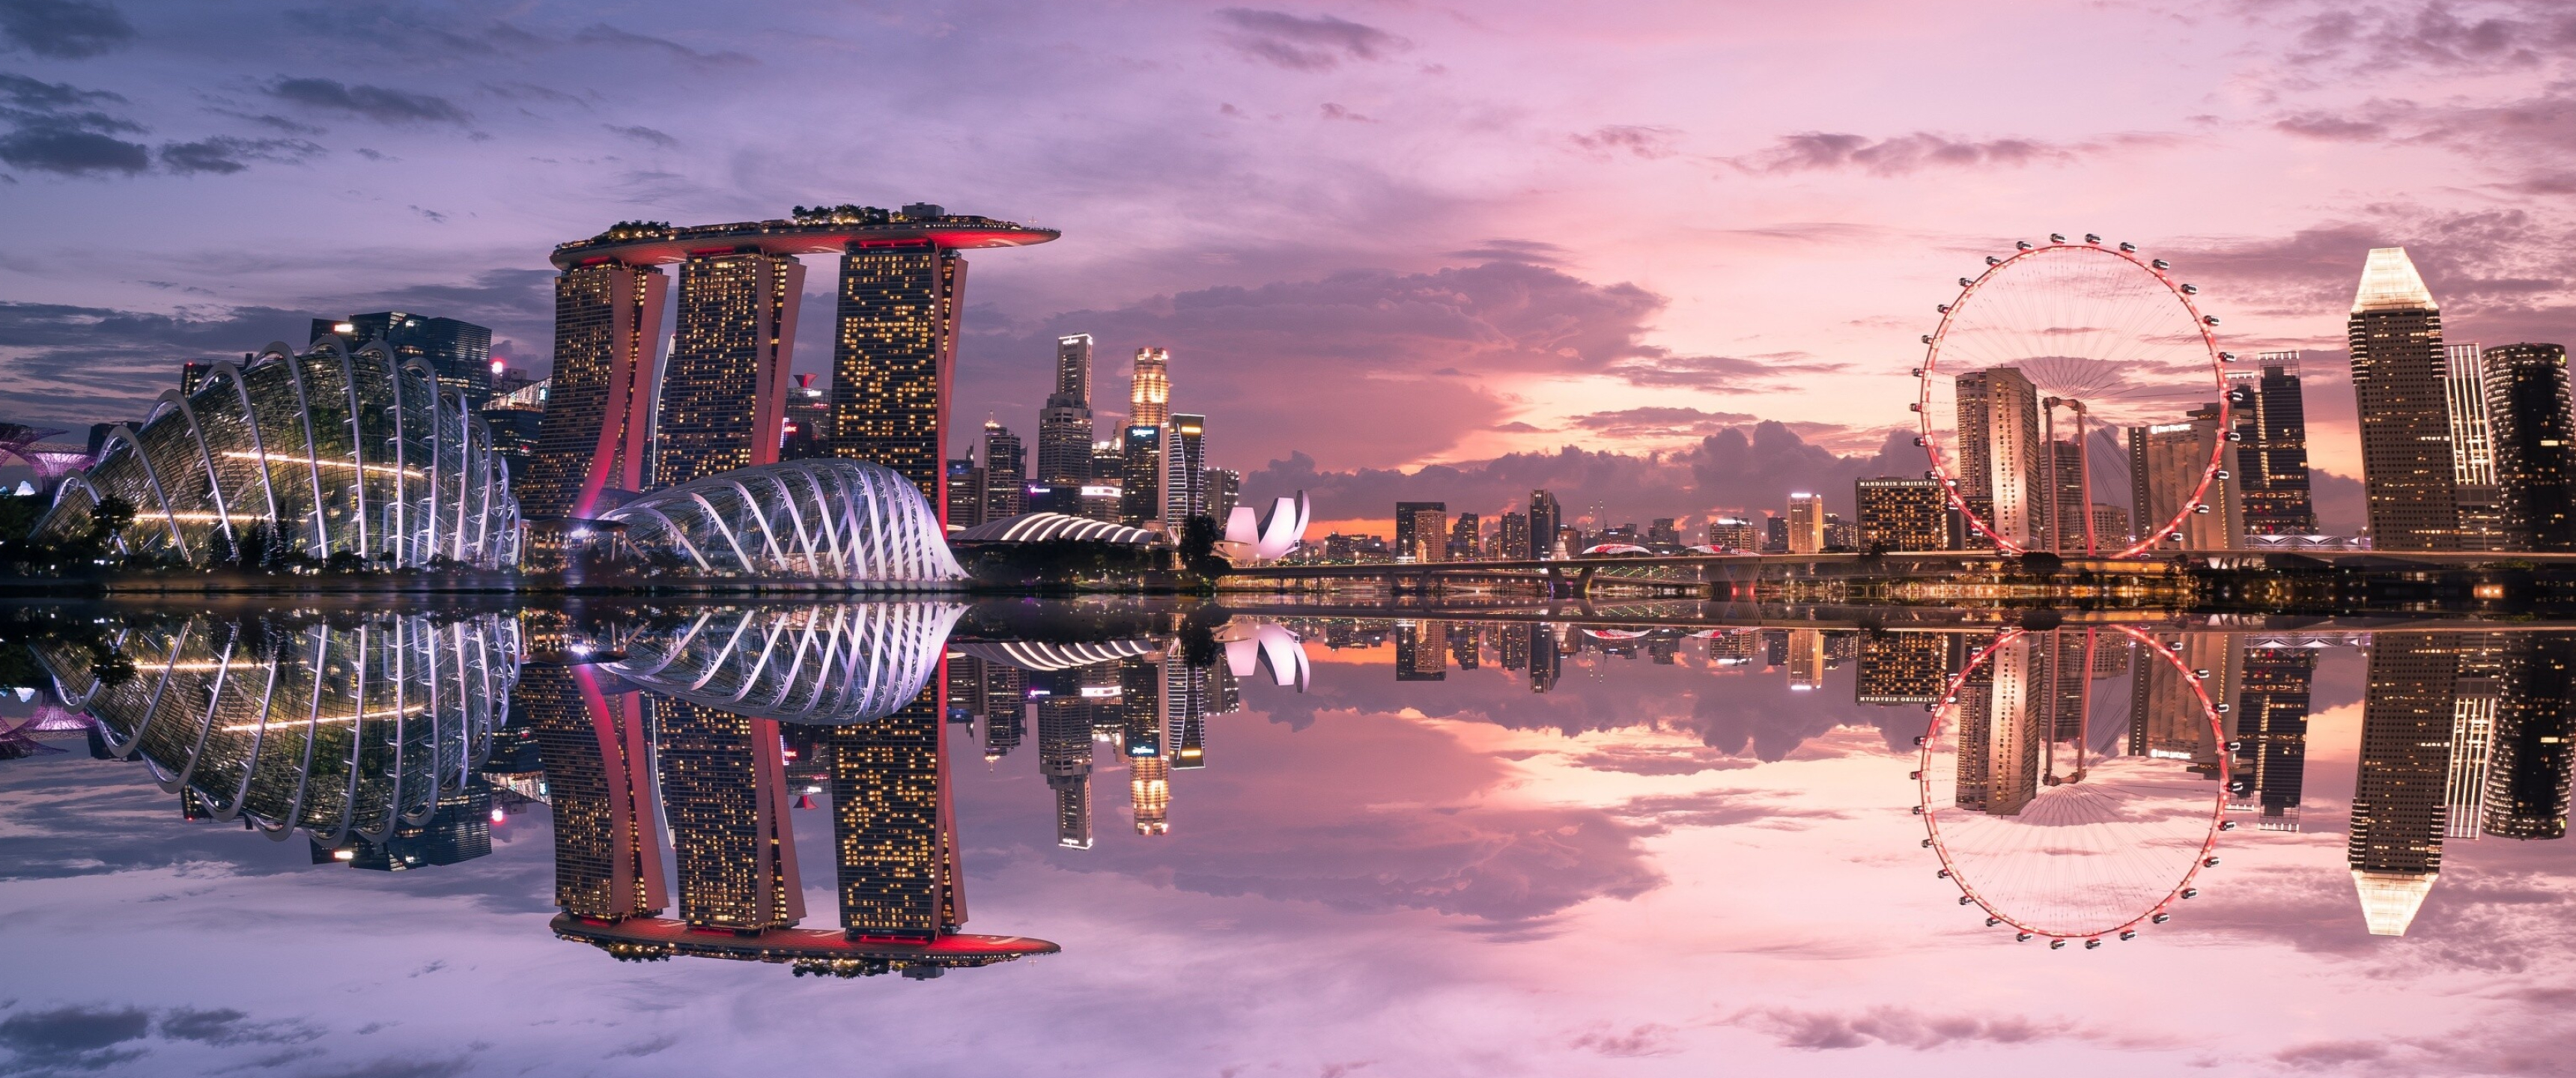 Singapore: Marina Bay Sands, Gardens by the Bay, Marina Bay Financial Center, CBD. 3440x1440 Dual Screen Background.